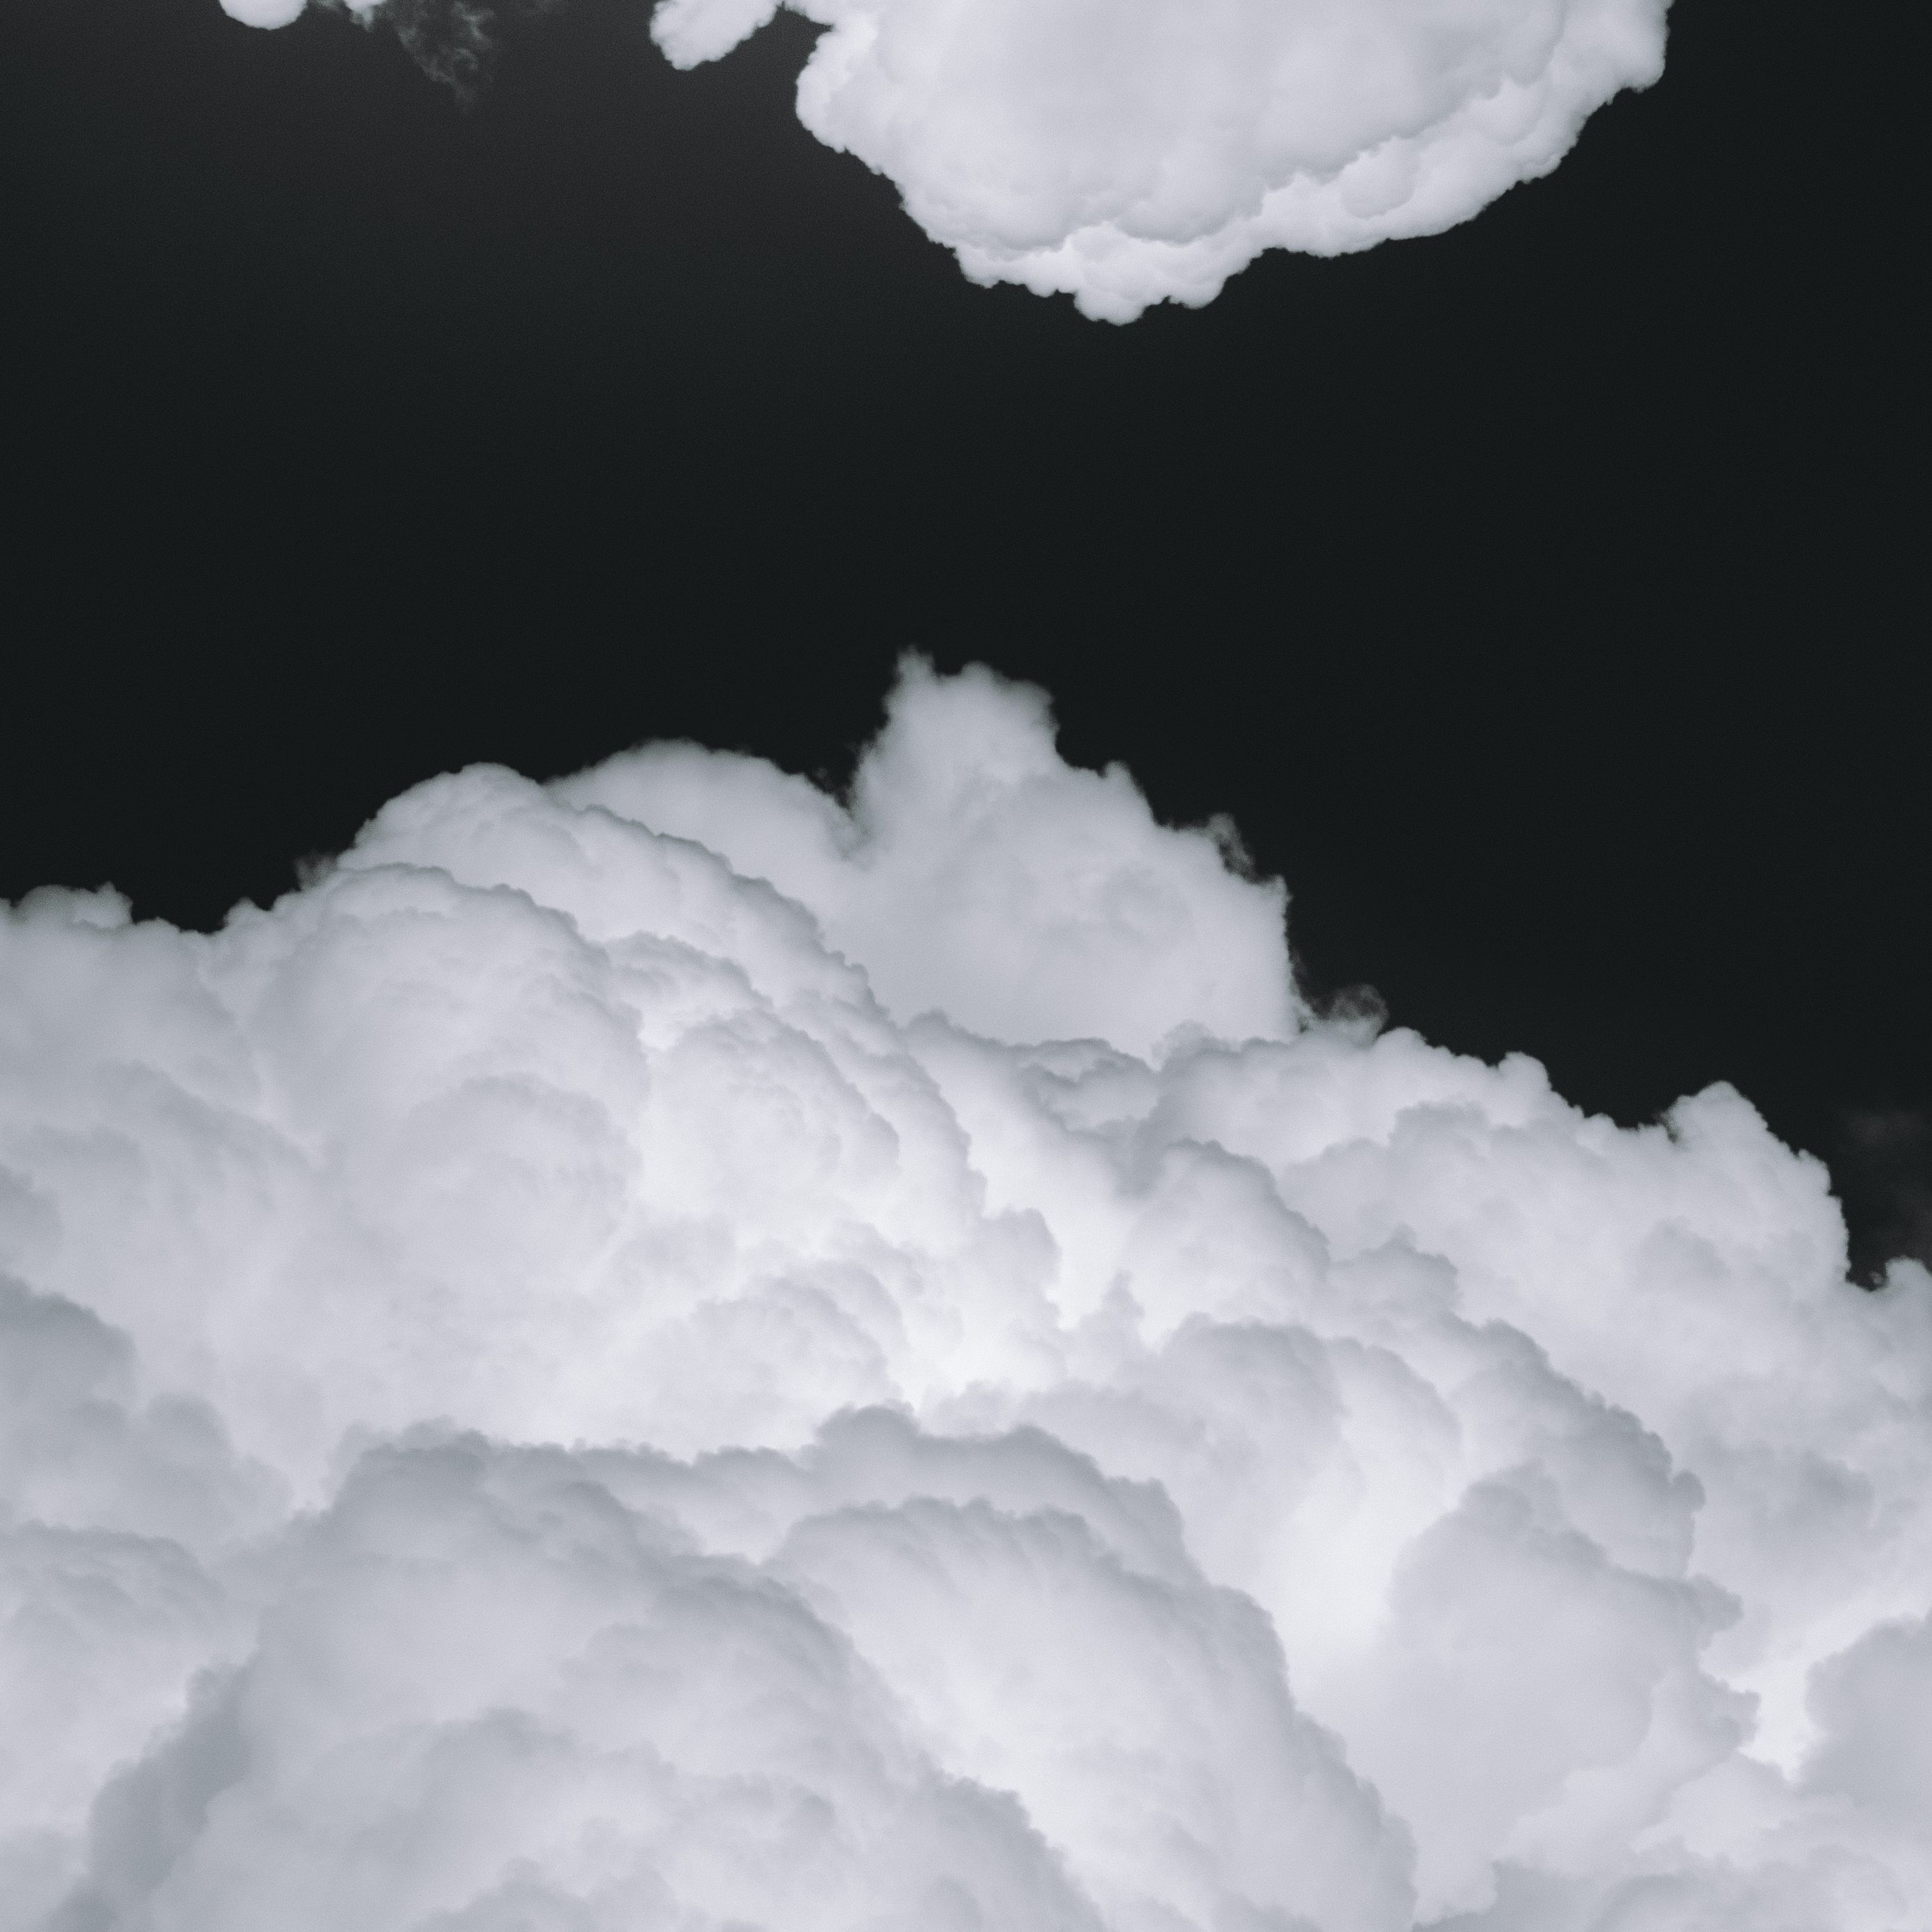 Download wallpaper 2780x2780 clouds